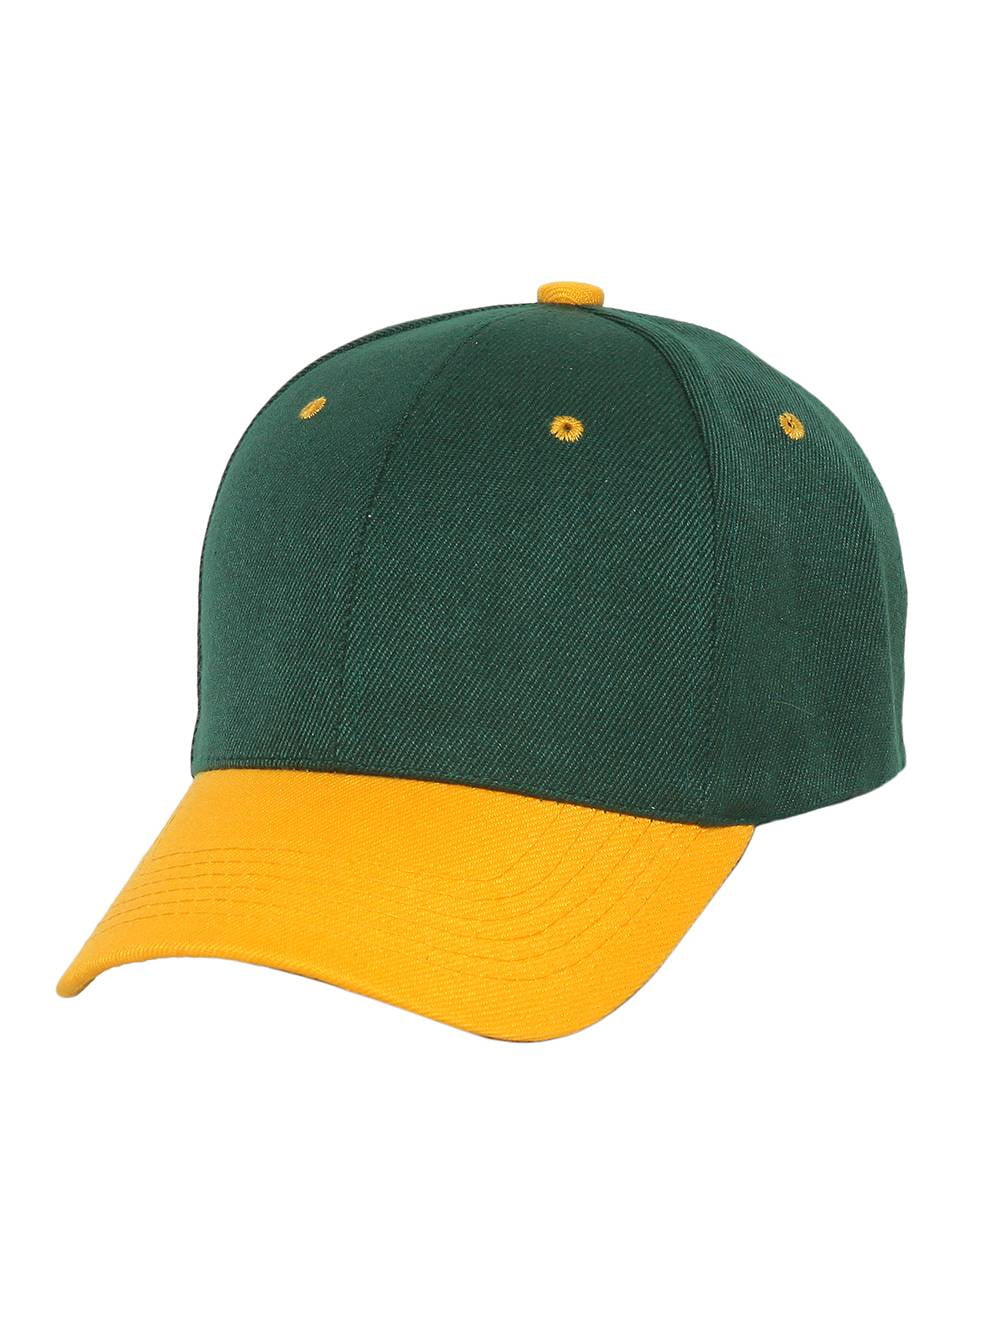 Two-Tone Adjustable Cap, Baseball Green Yellow